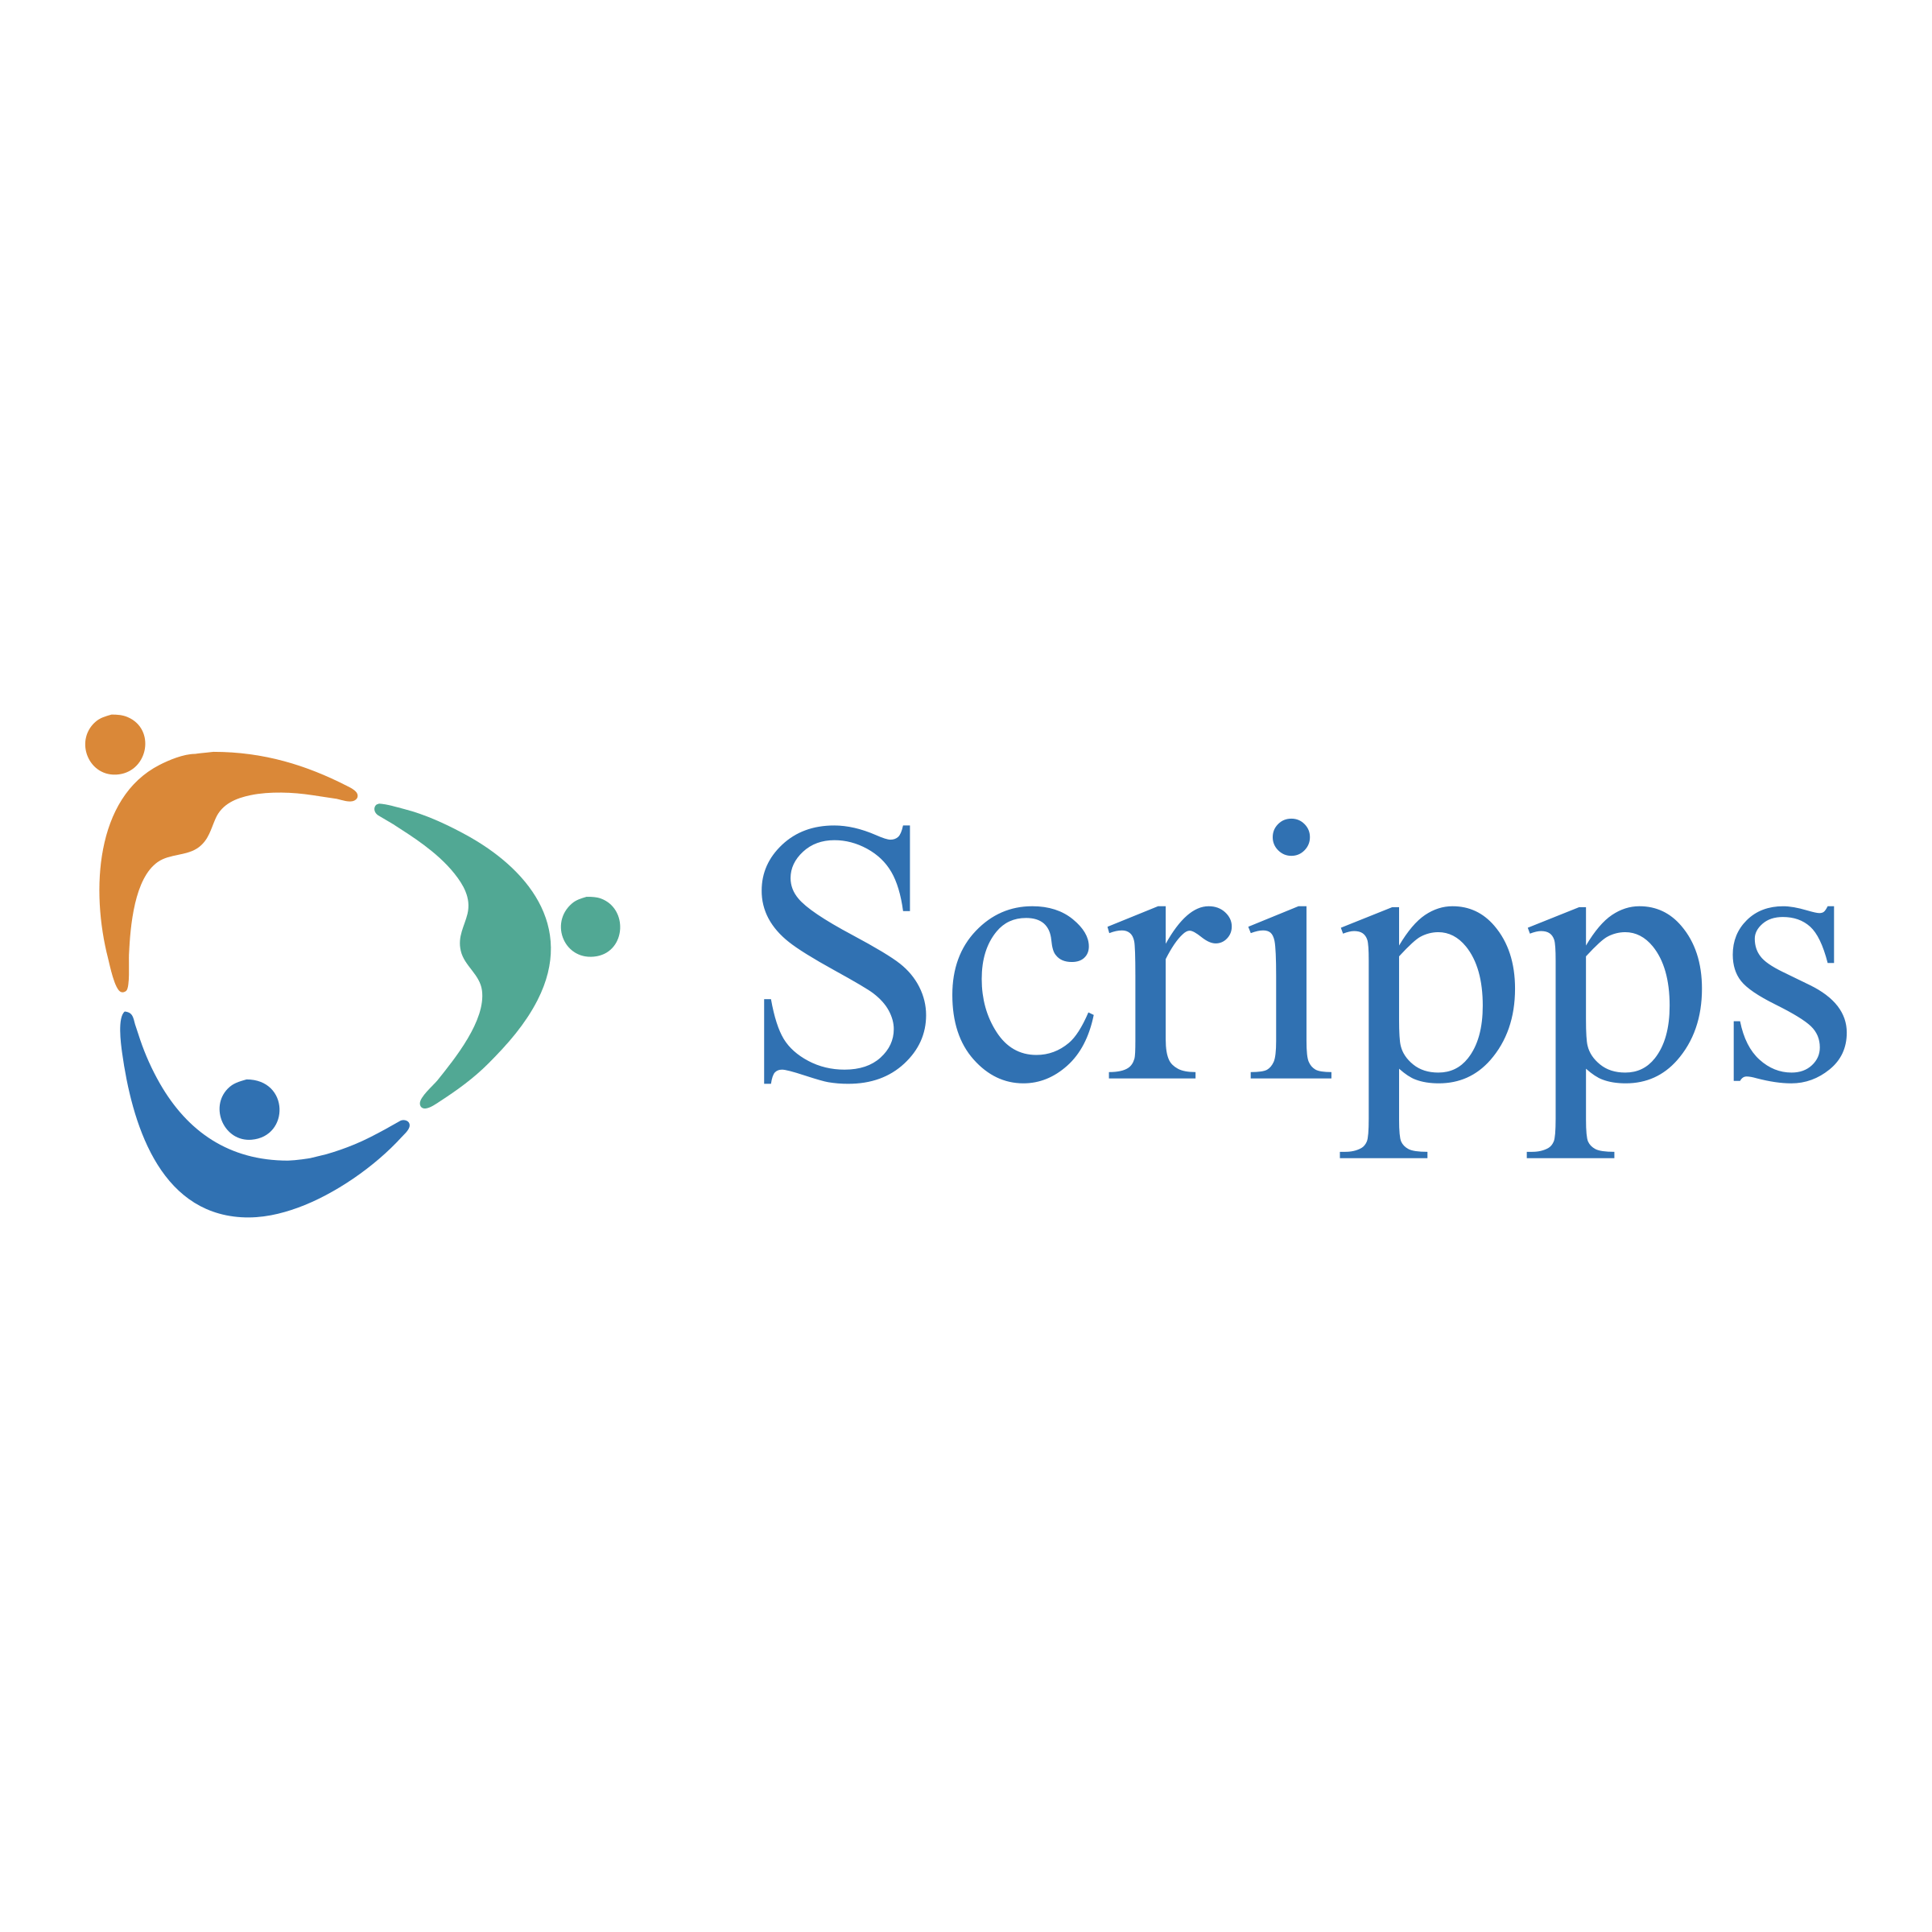 Scripps Logo - Scripps Logo PNG Transparent & SVG Vector - Freebie Supply